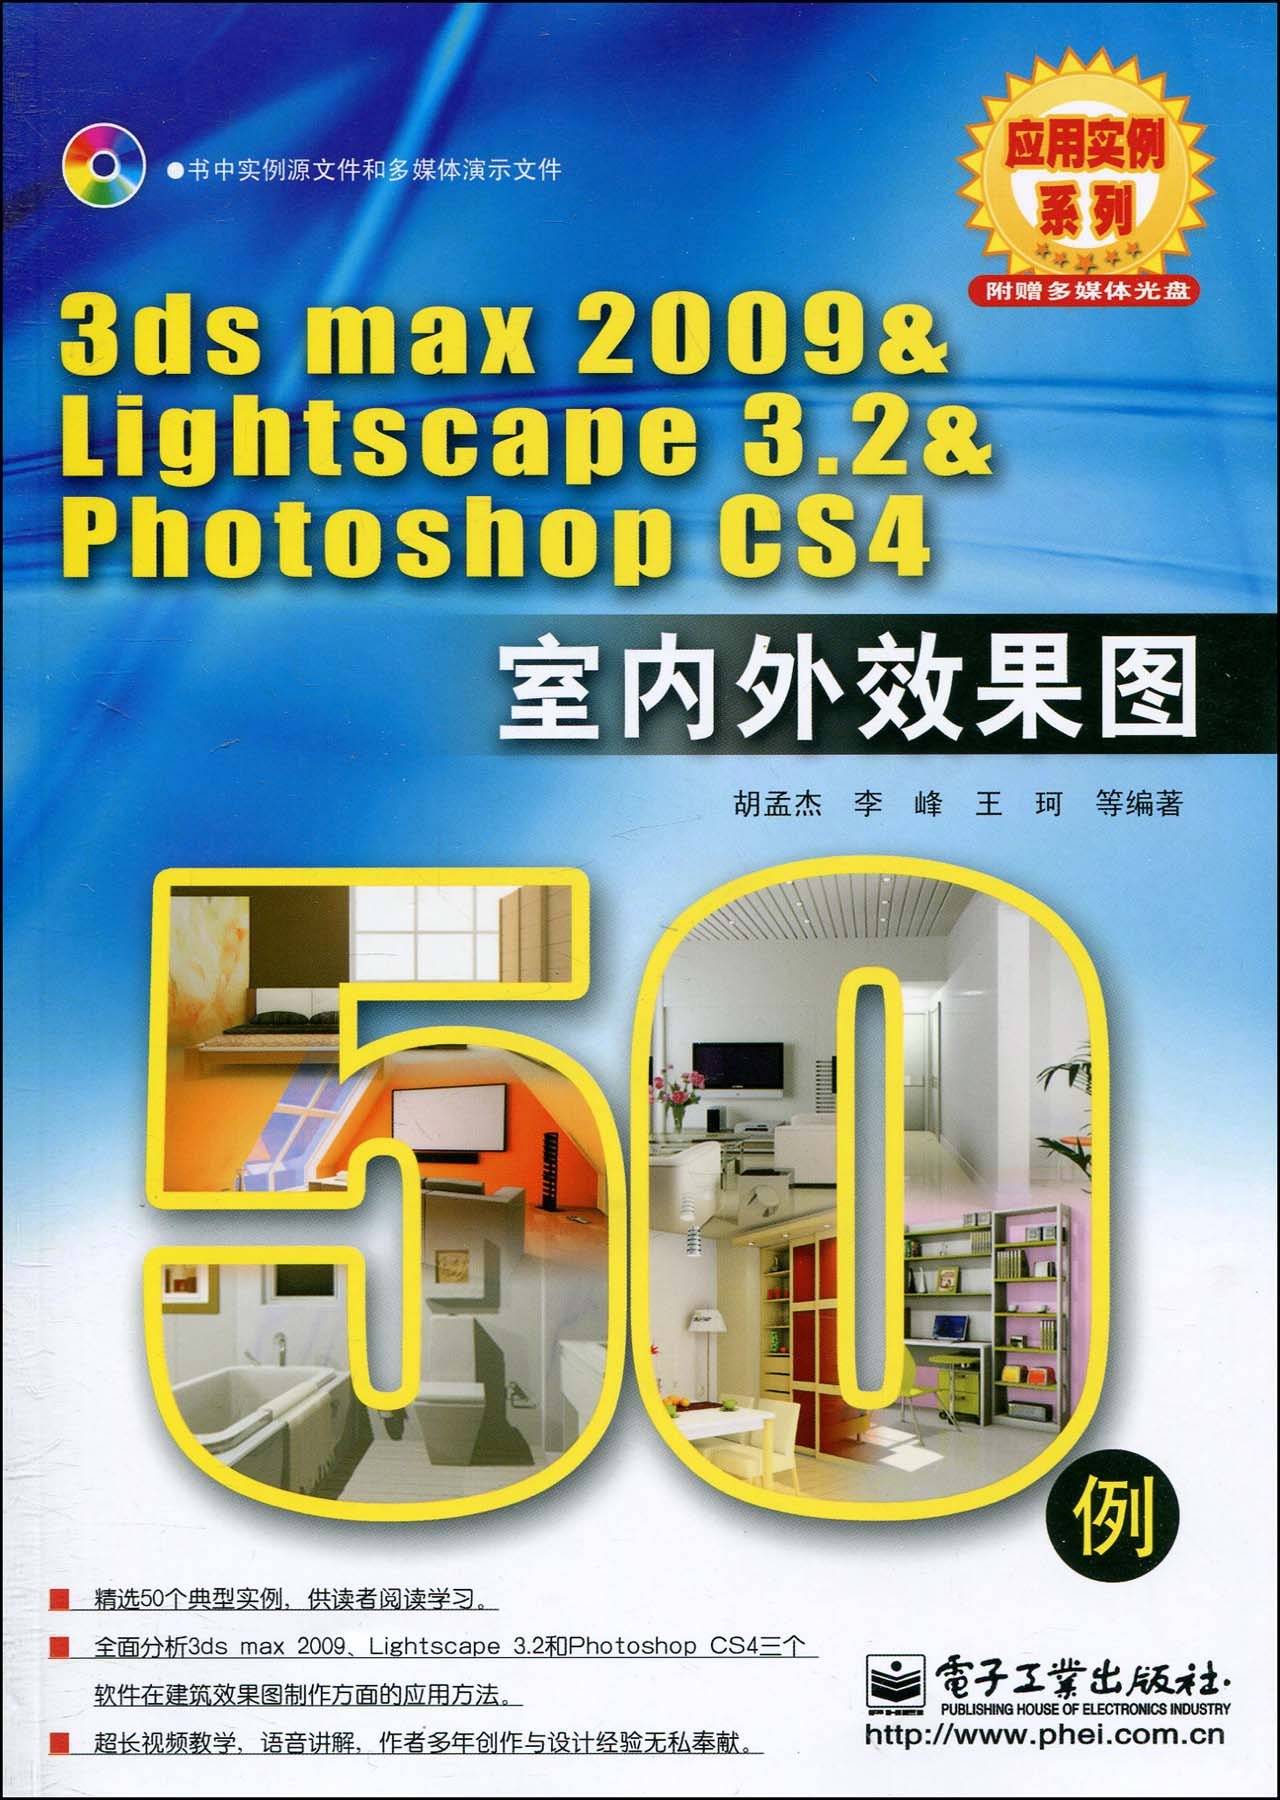 3dsmax2009&Lightscape3.2&PhotoshopCS4室內外效果圖50例